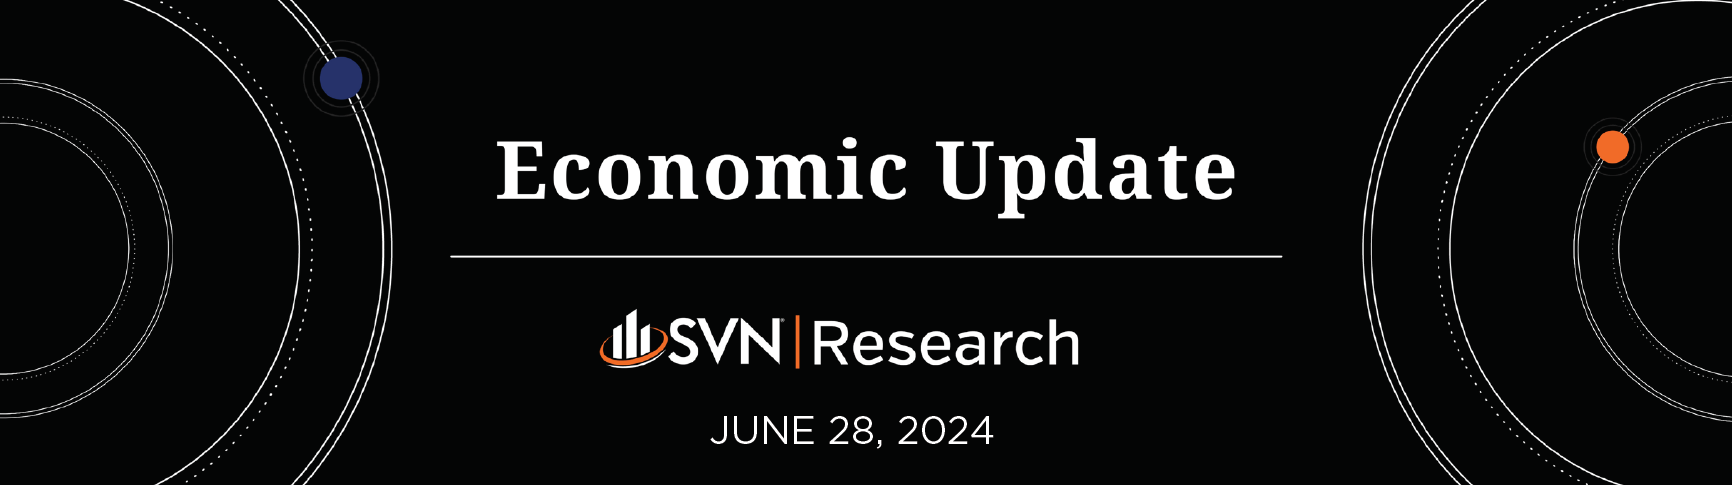 SVN | Research Economic Update 6.28.2024